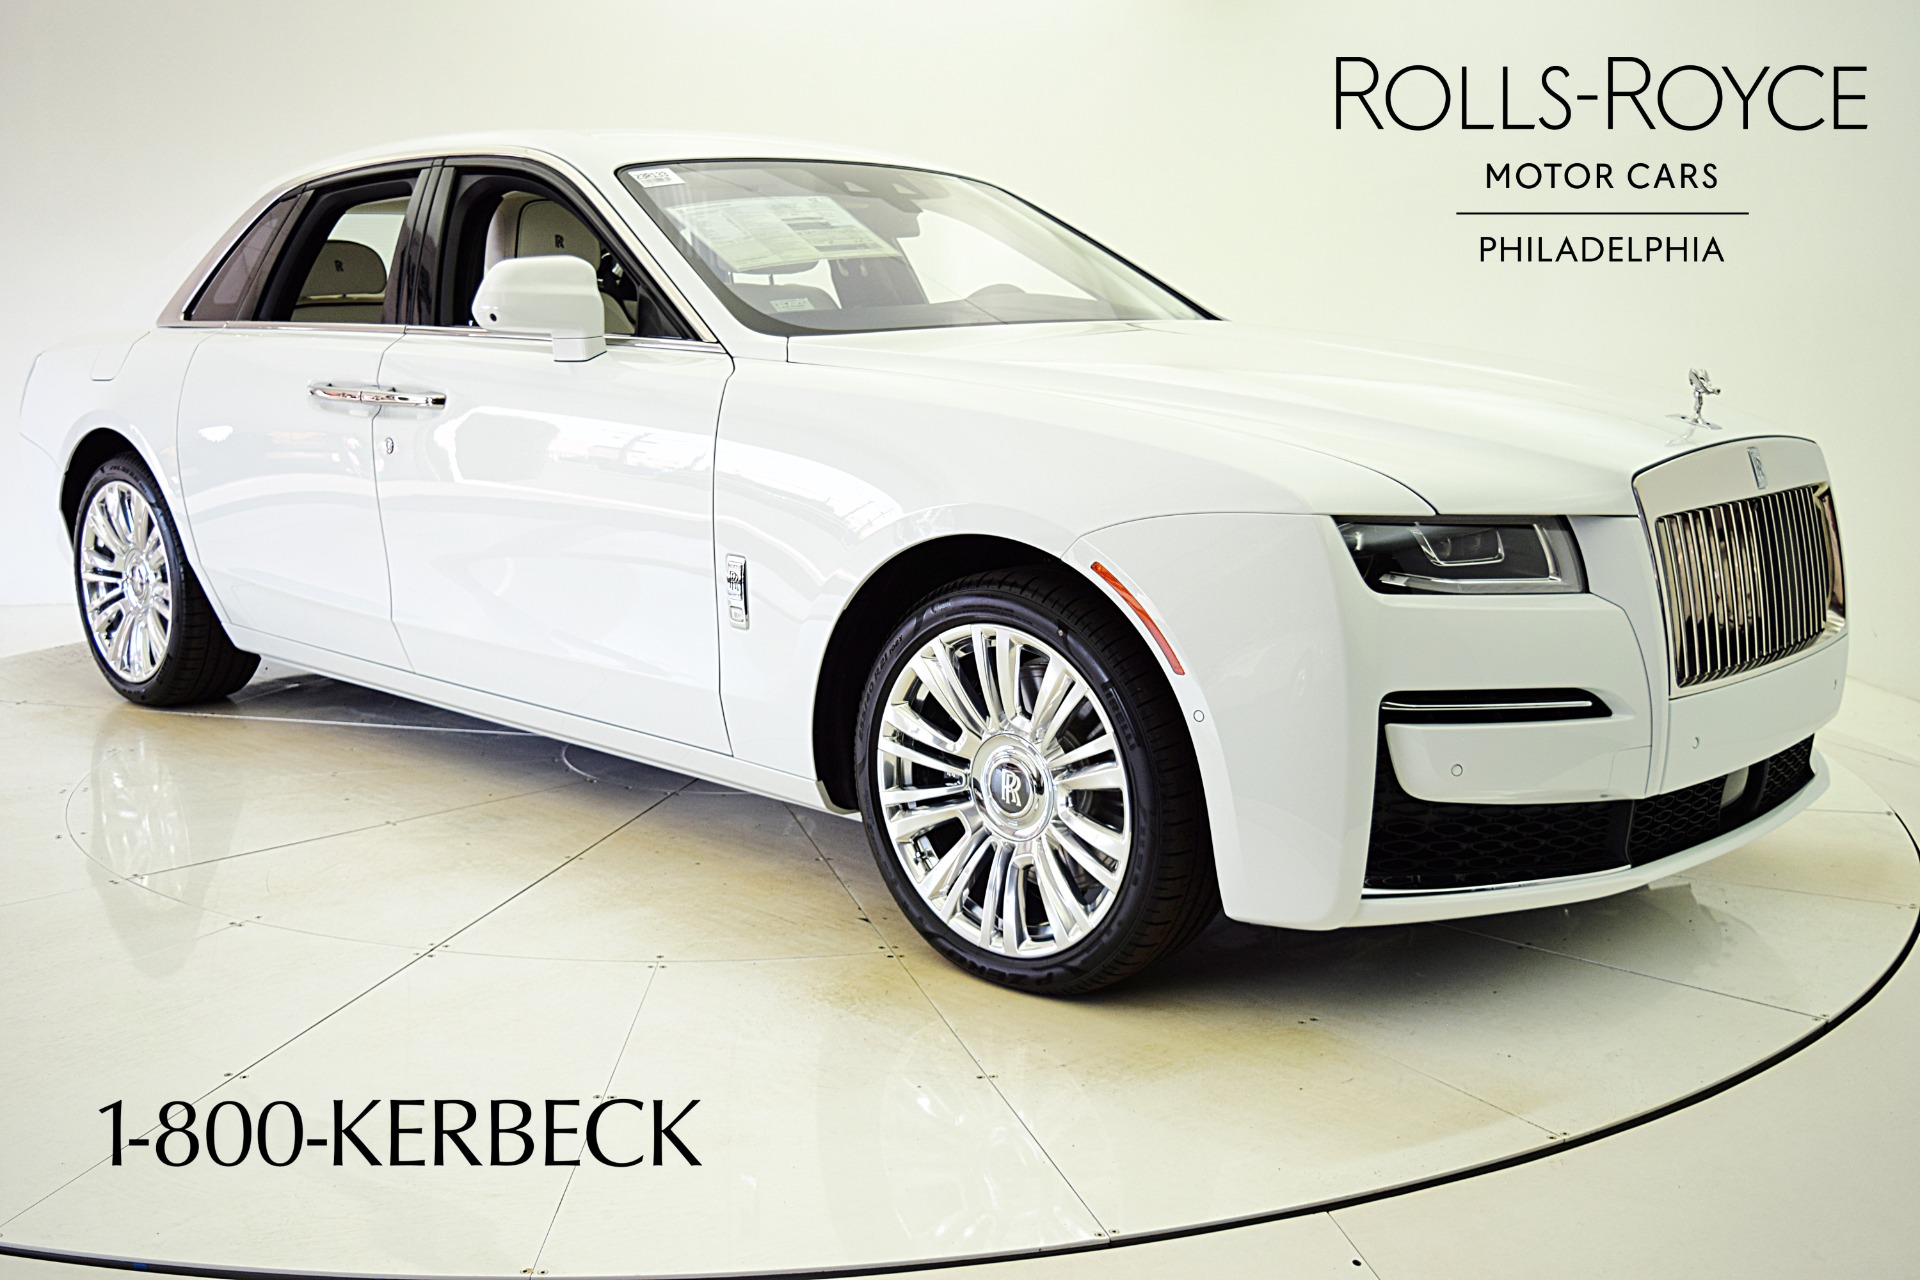 New 2023 Rolls-Royce Ghost For Sale ($386,800)  Rolls-Royce Motor Cars  Philadelphia Stock #23R127